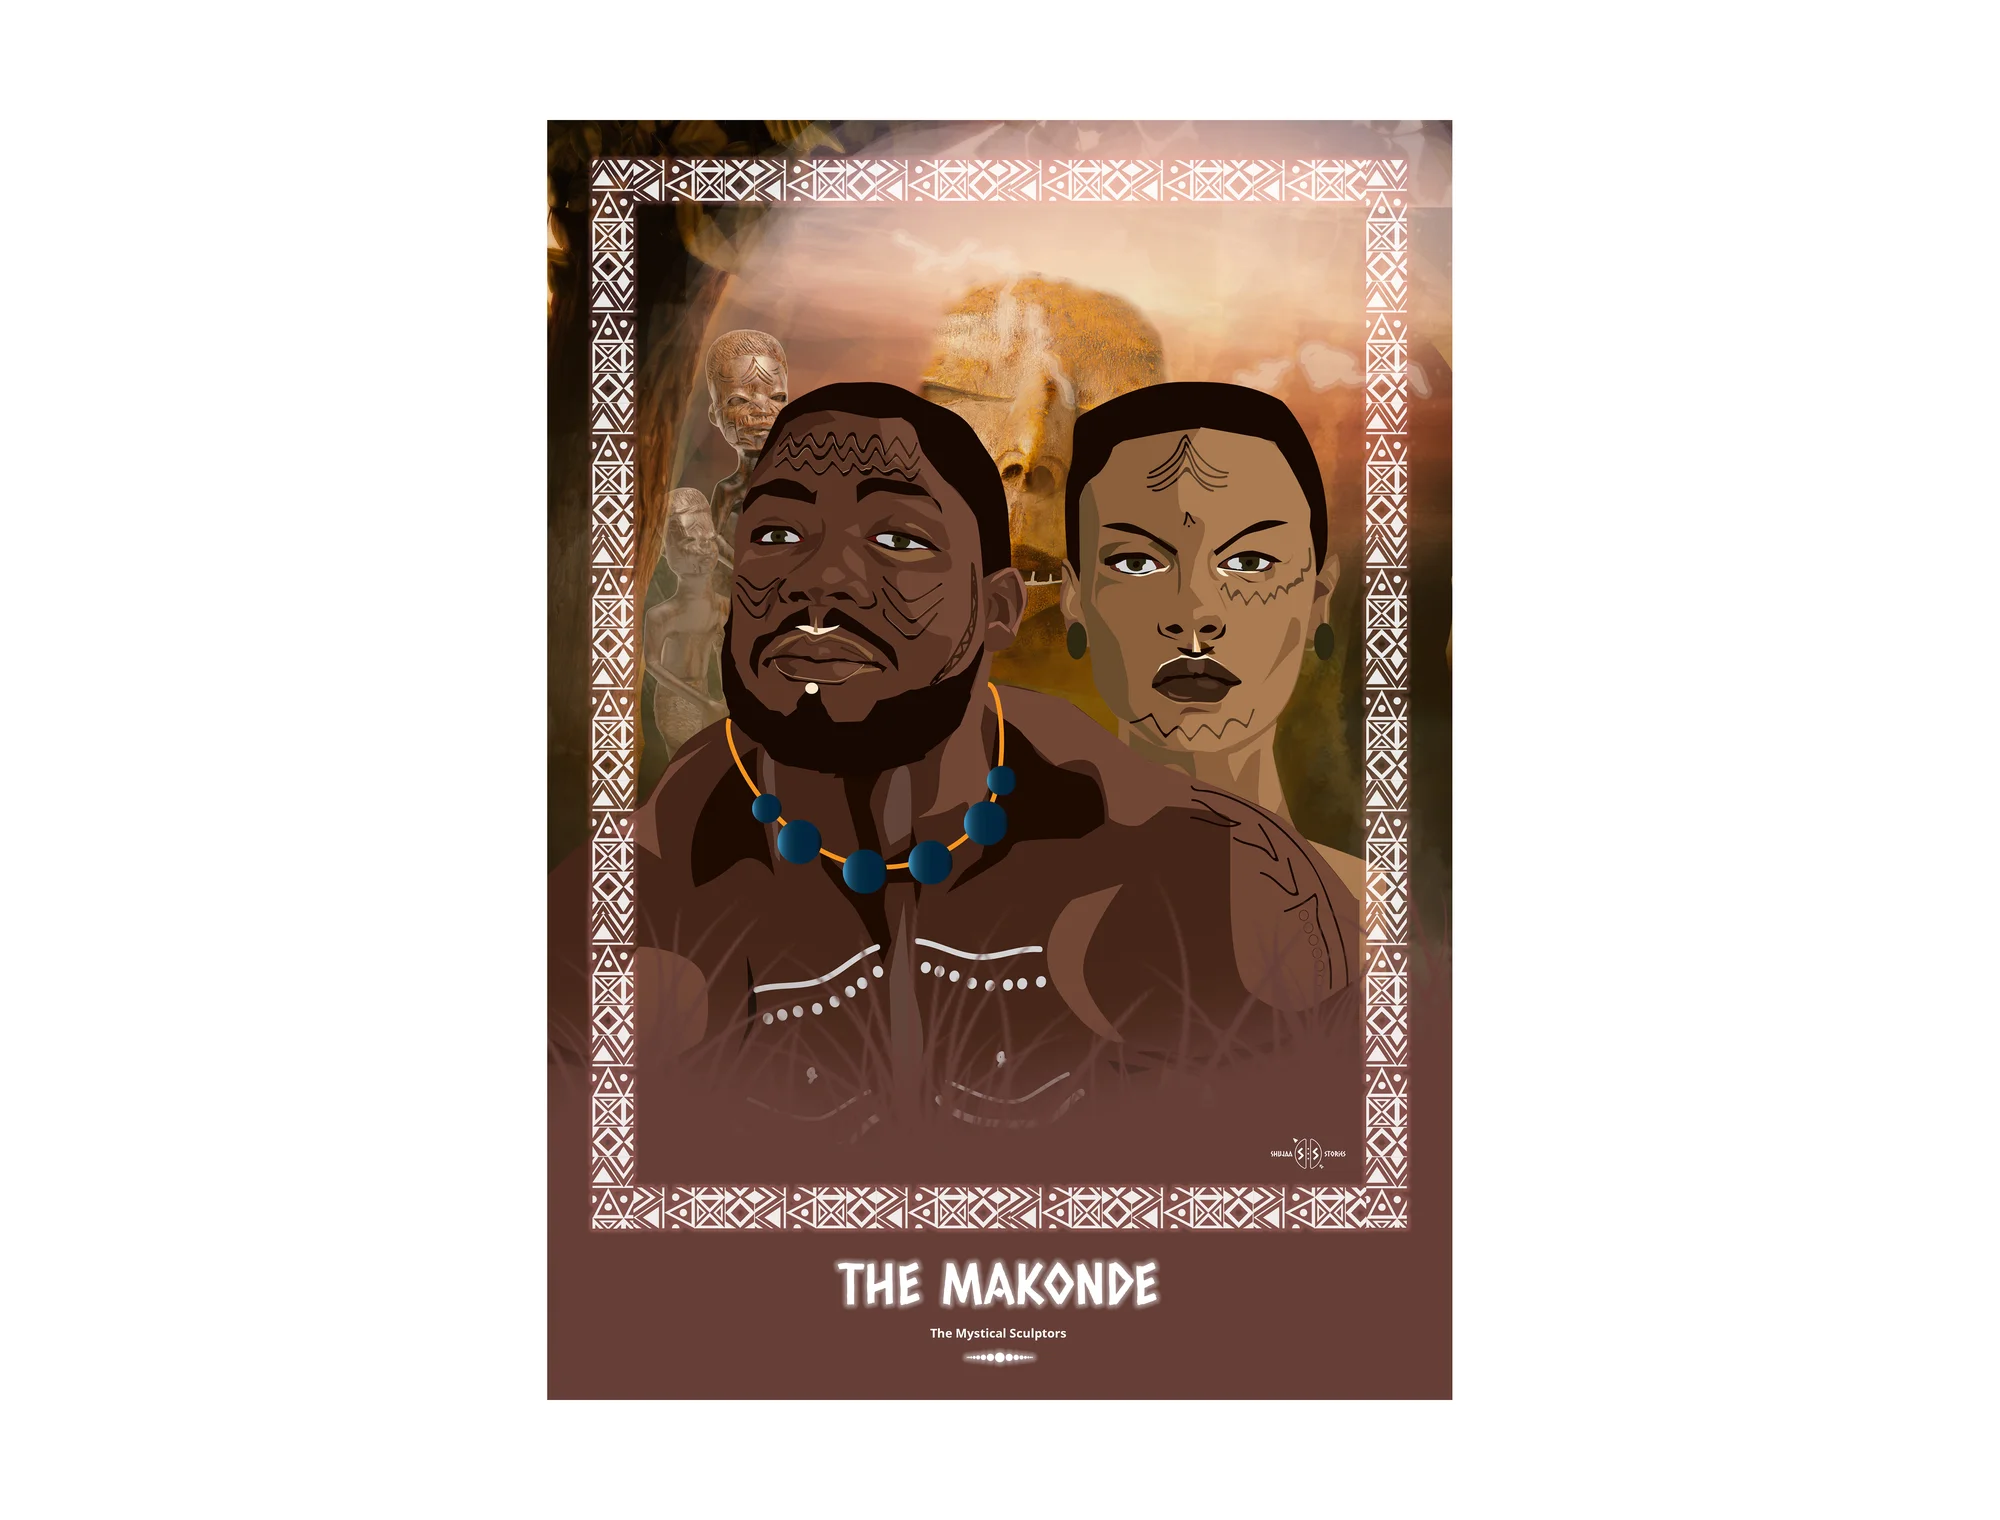 The Makonde: The Mystical Sculptors (Makonde community) - National Museums of Kenya and Shujaa Stories